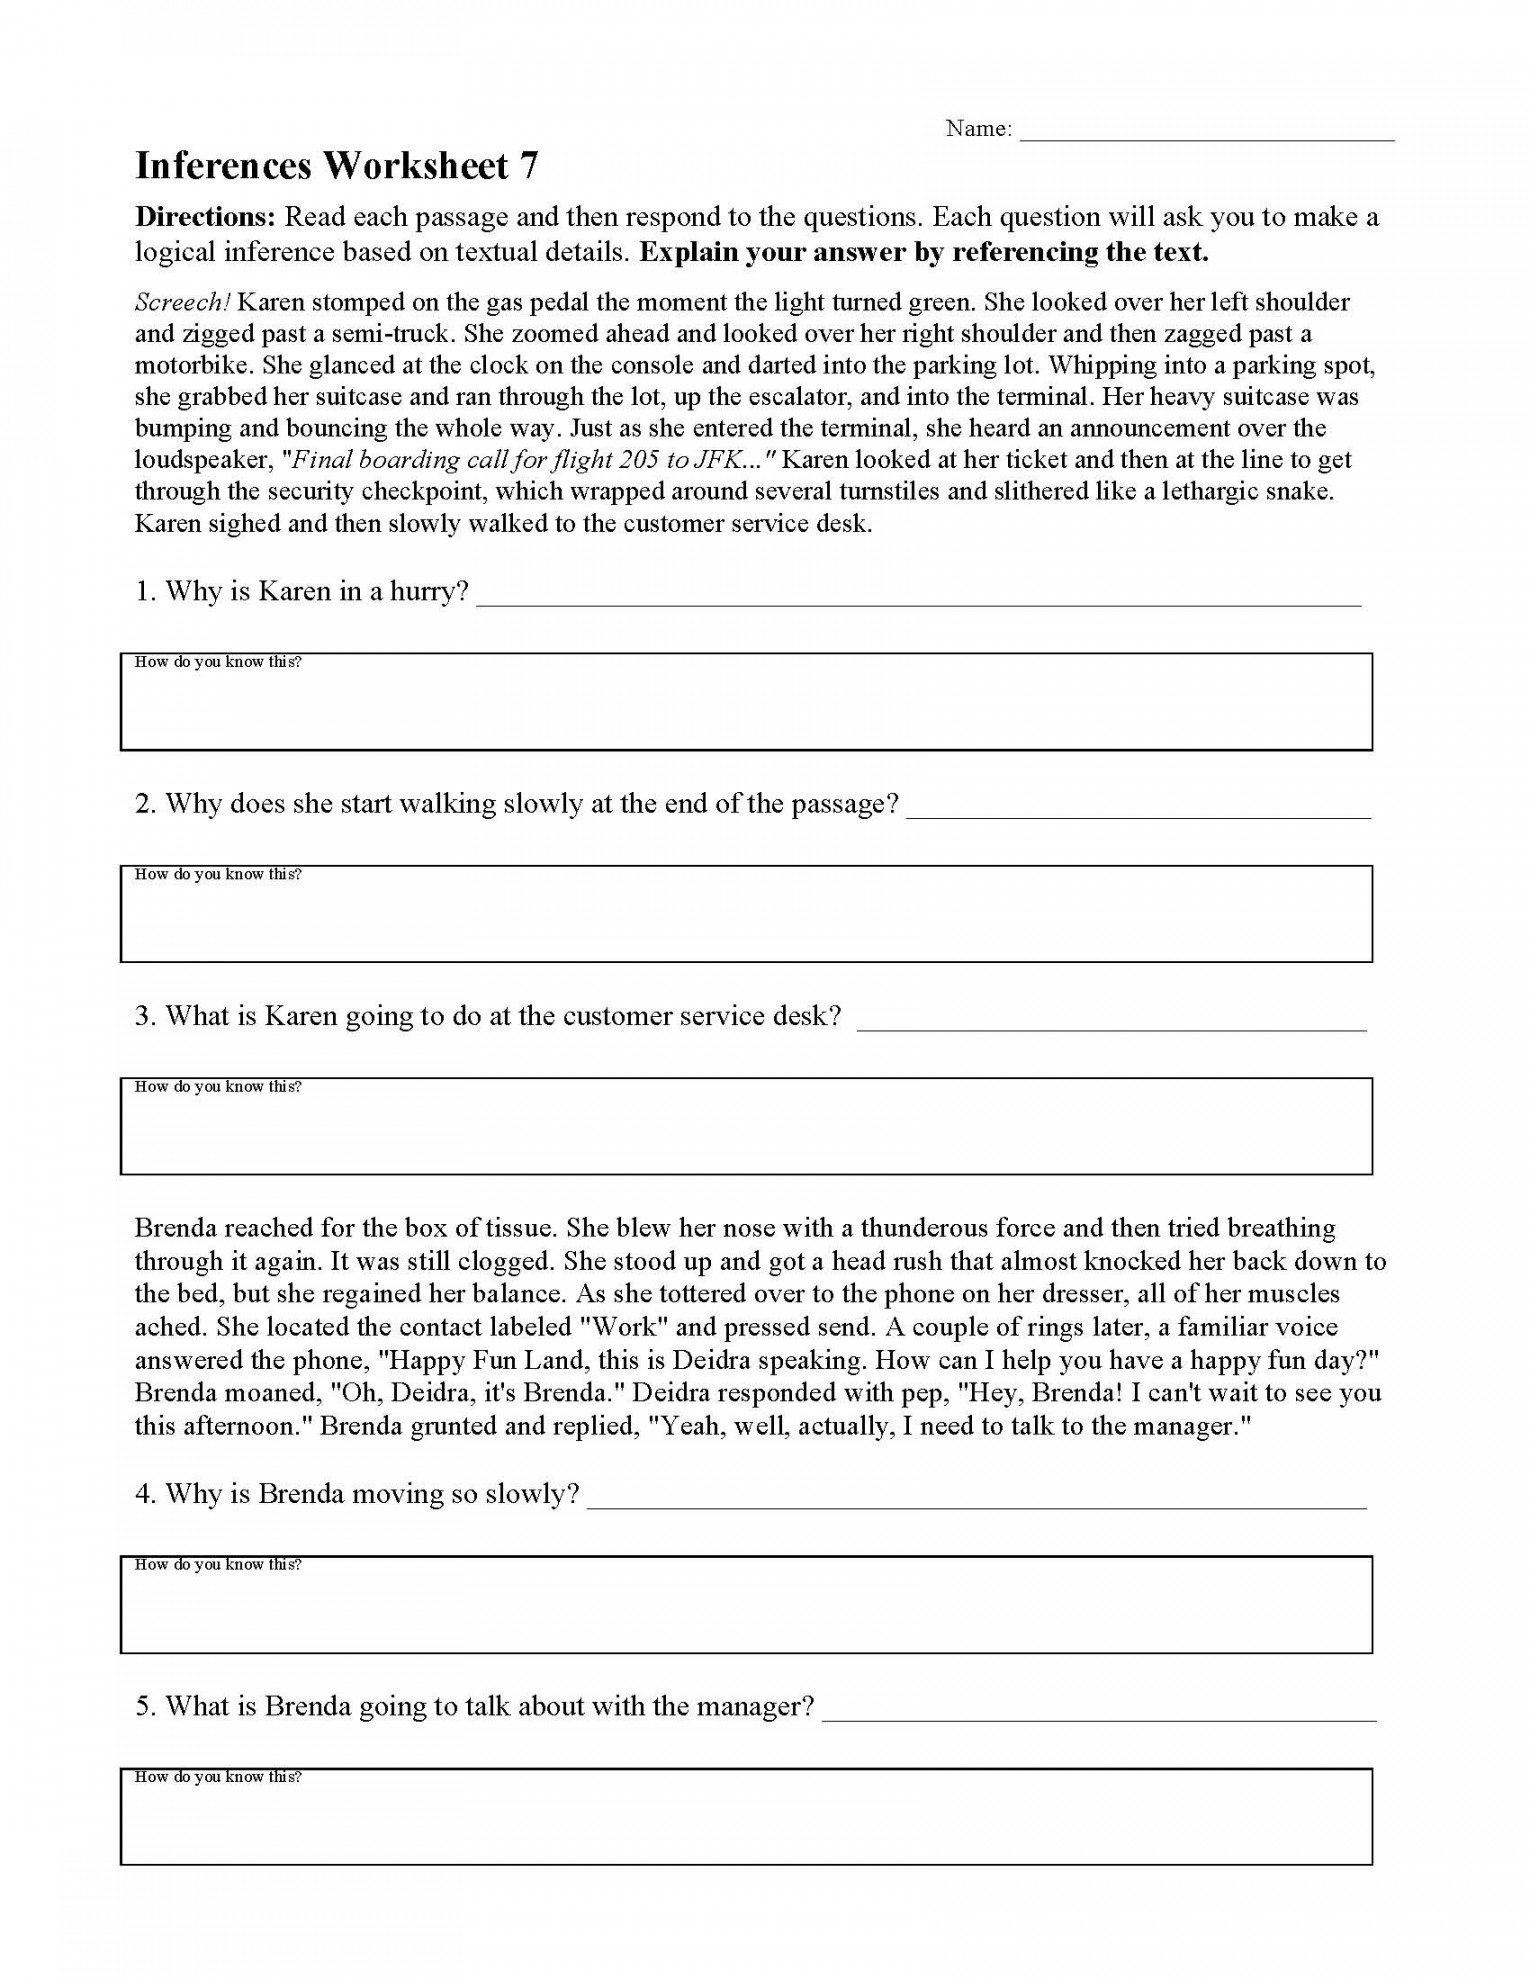 6th-grade-inference-worksheet-pdf